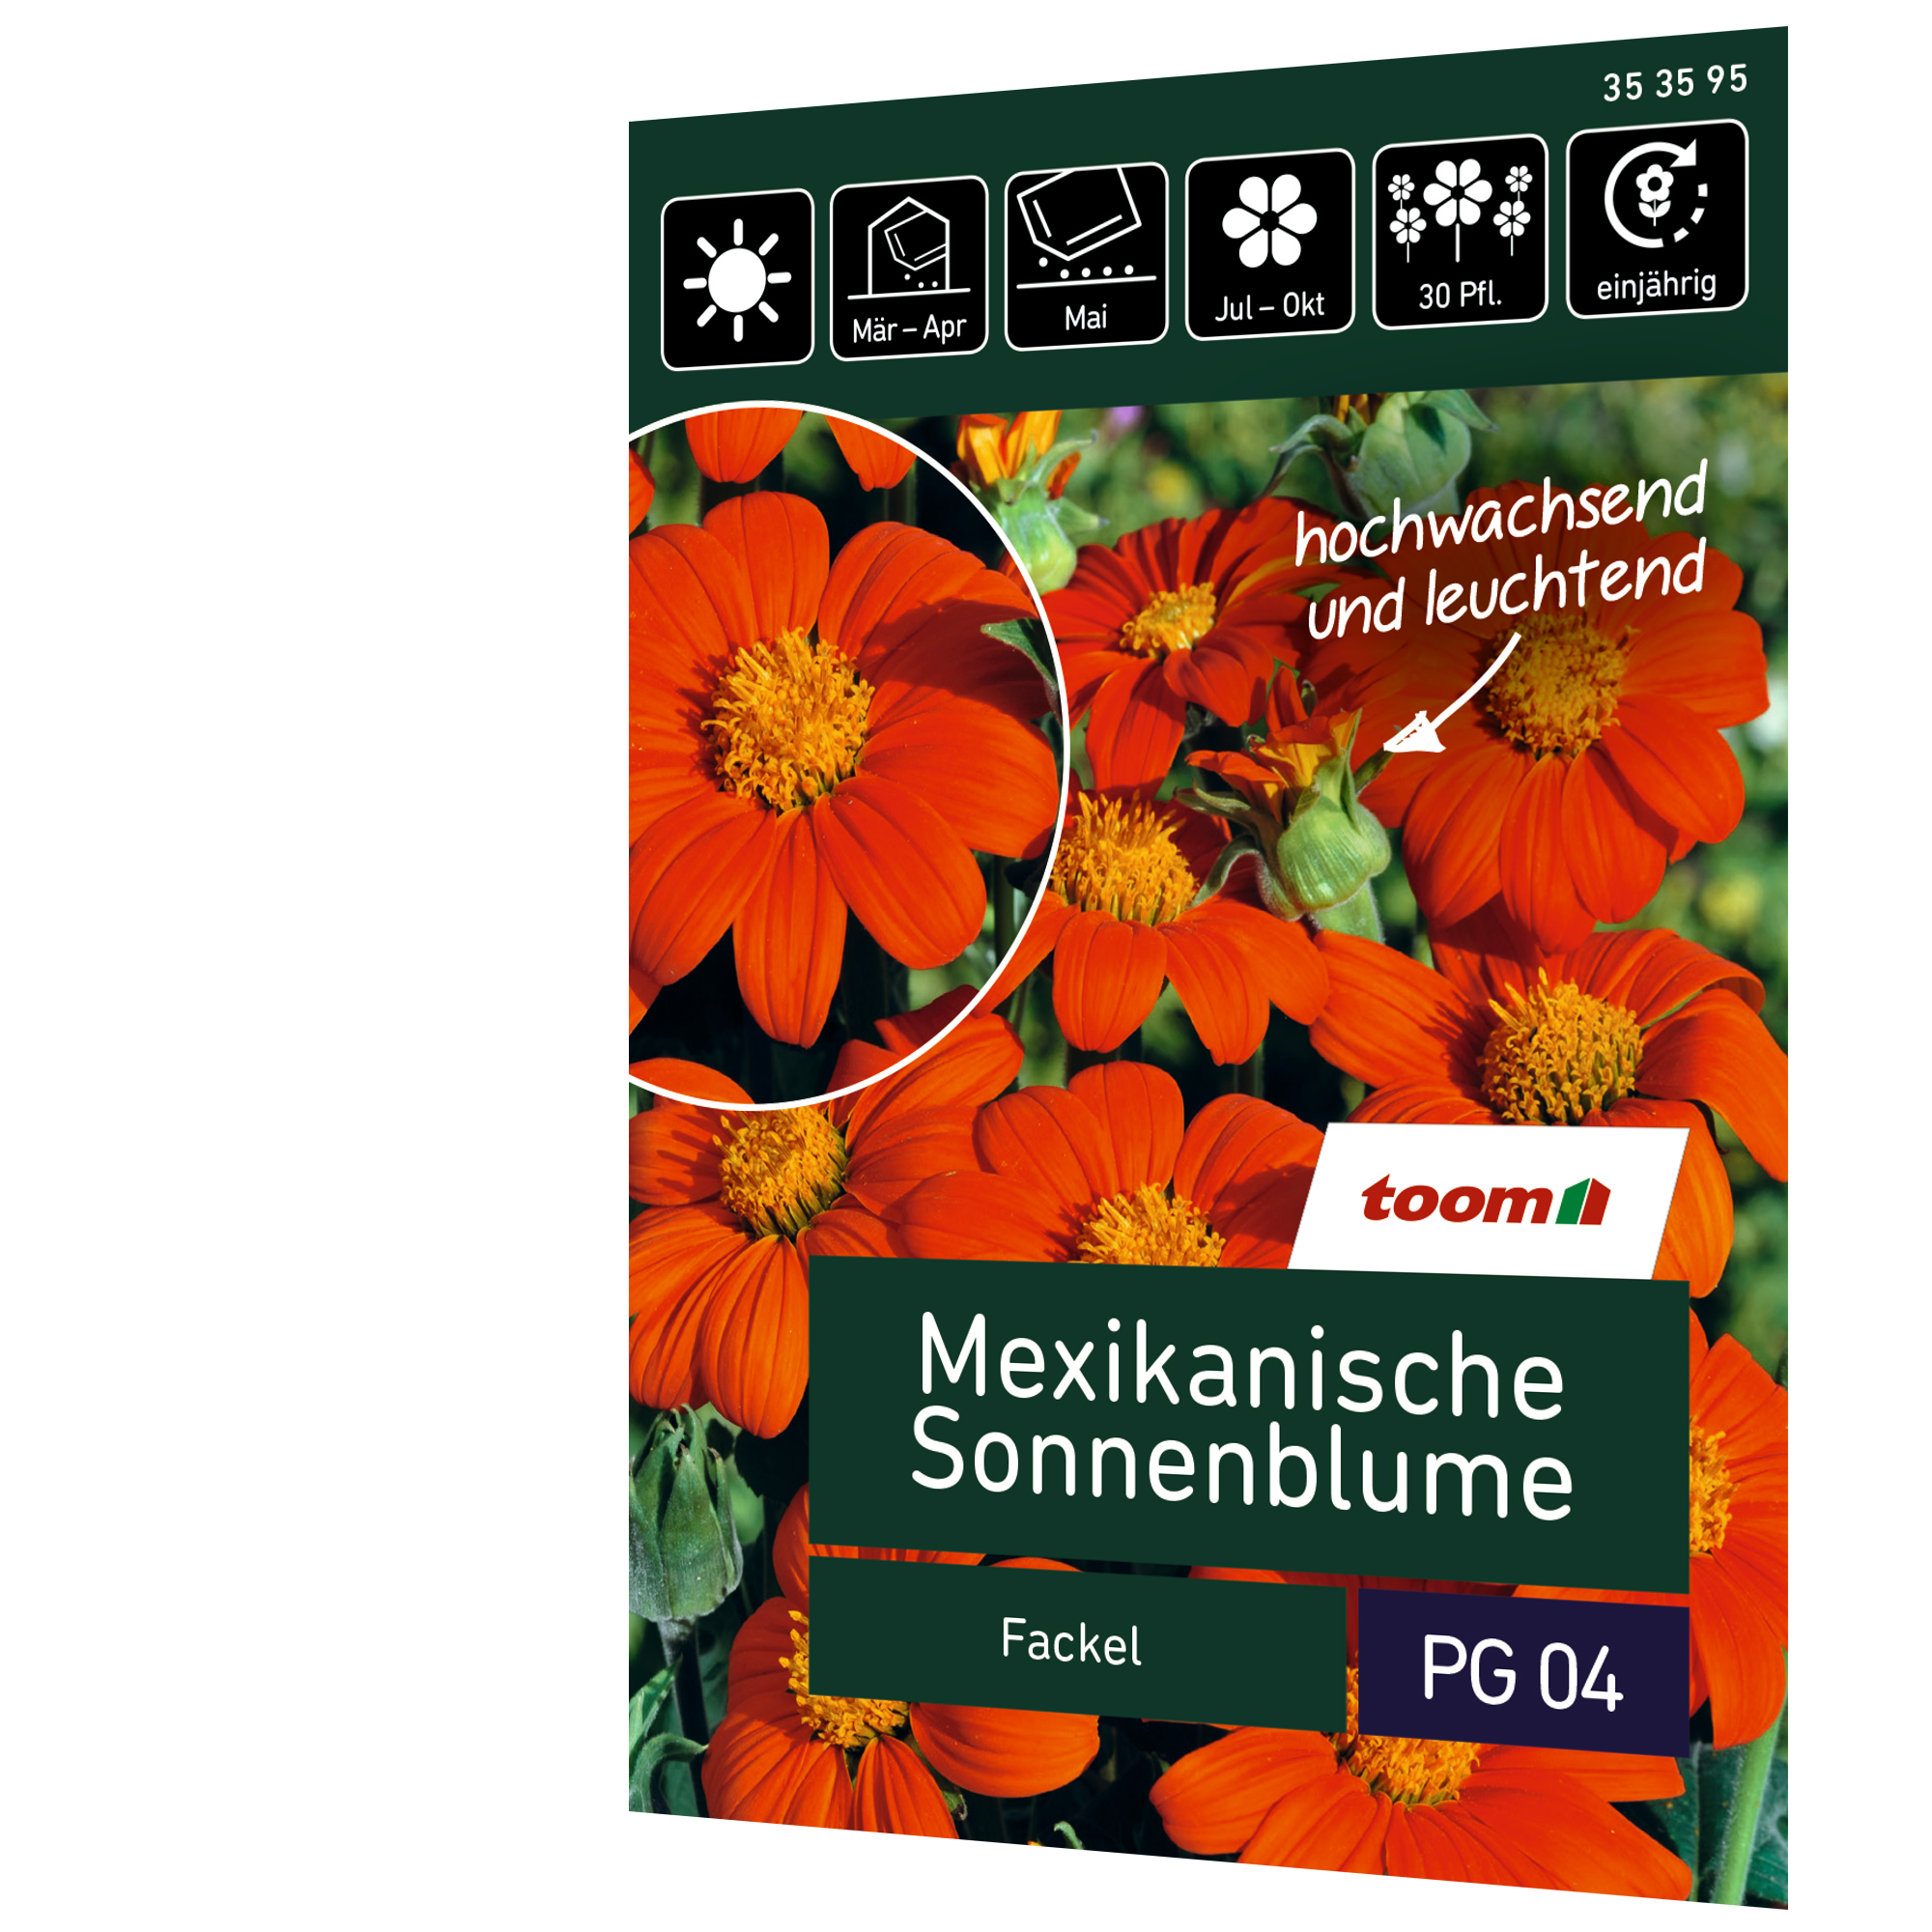 Mexikanische Sonnenblume 'Fackel' + product picture